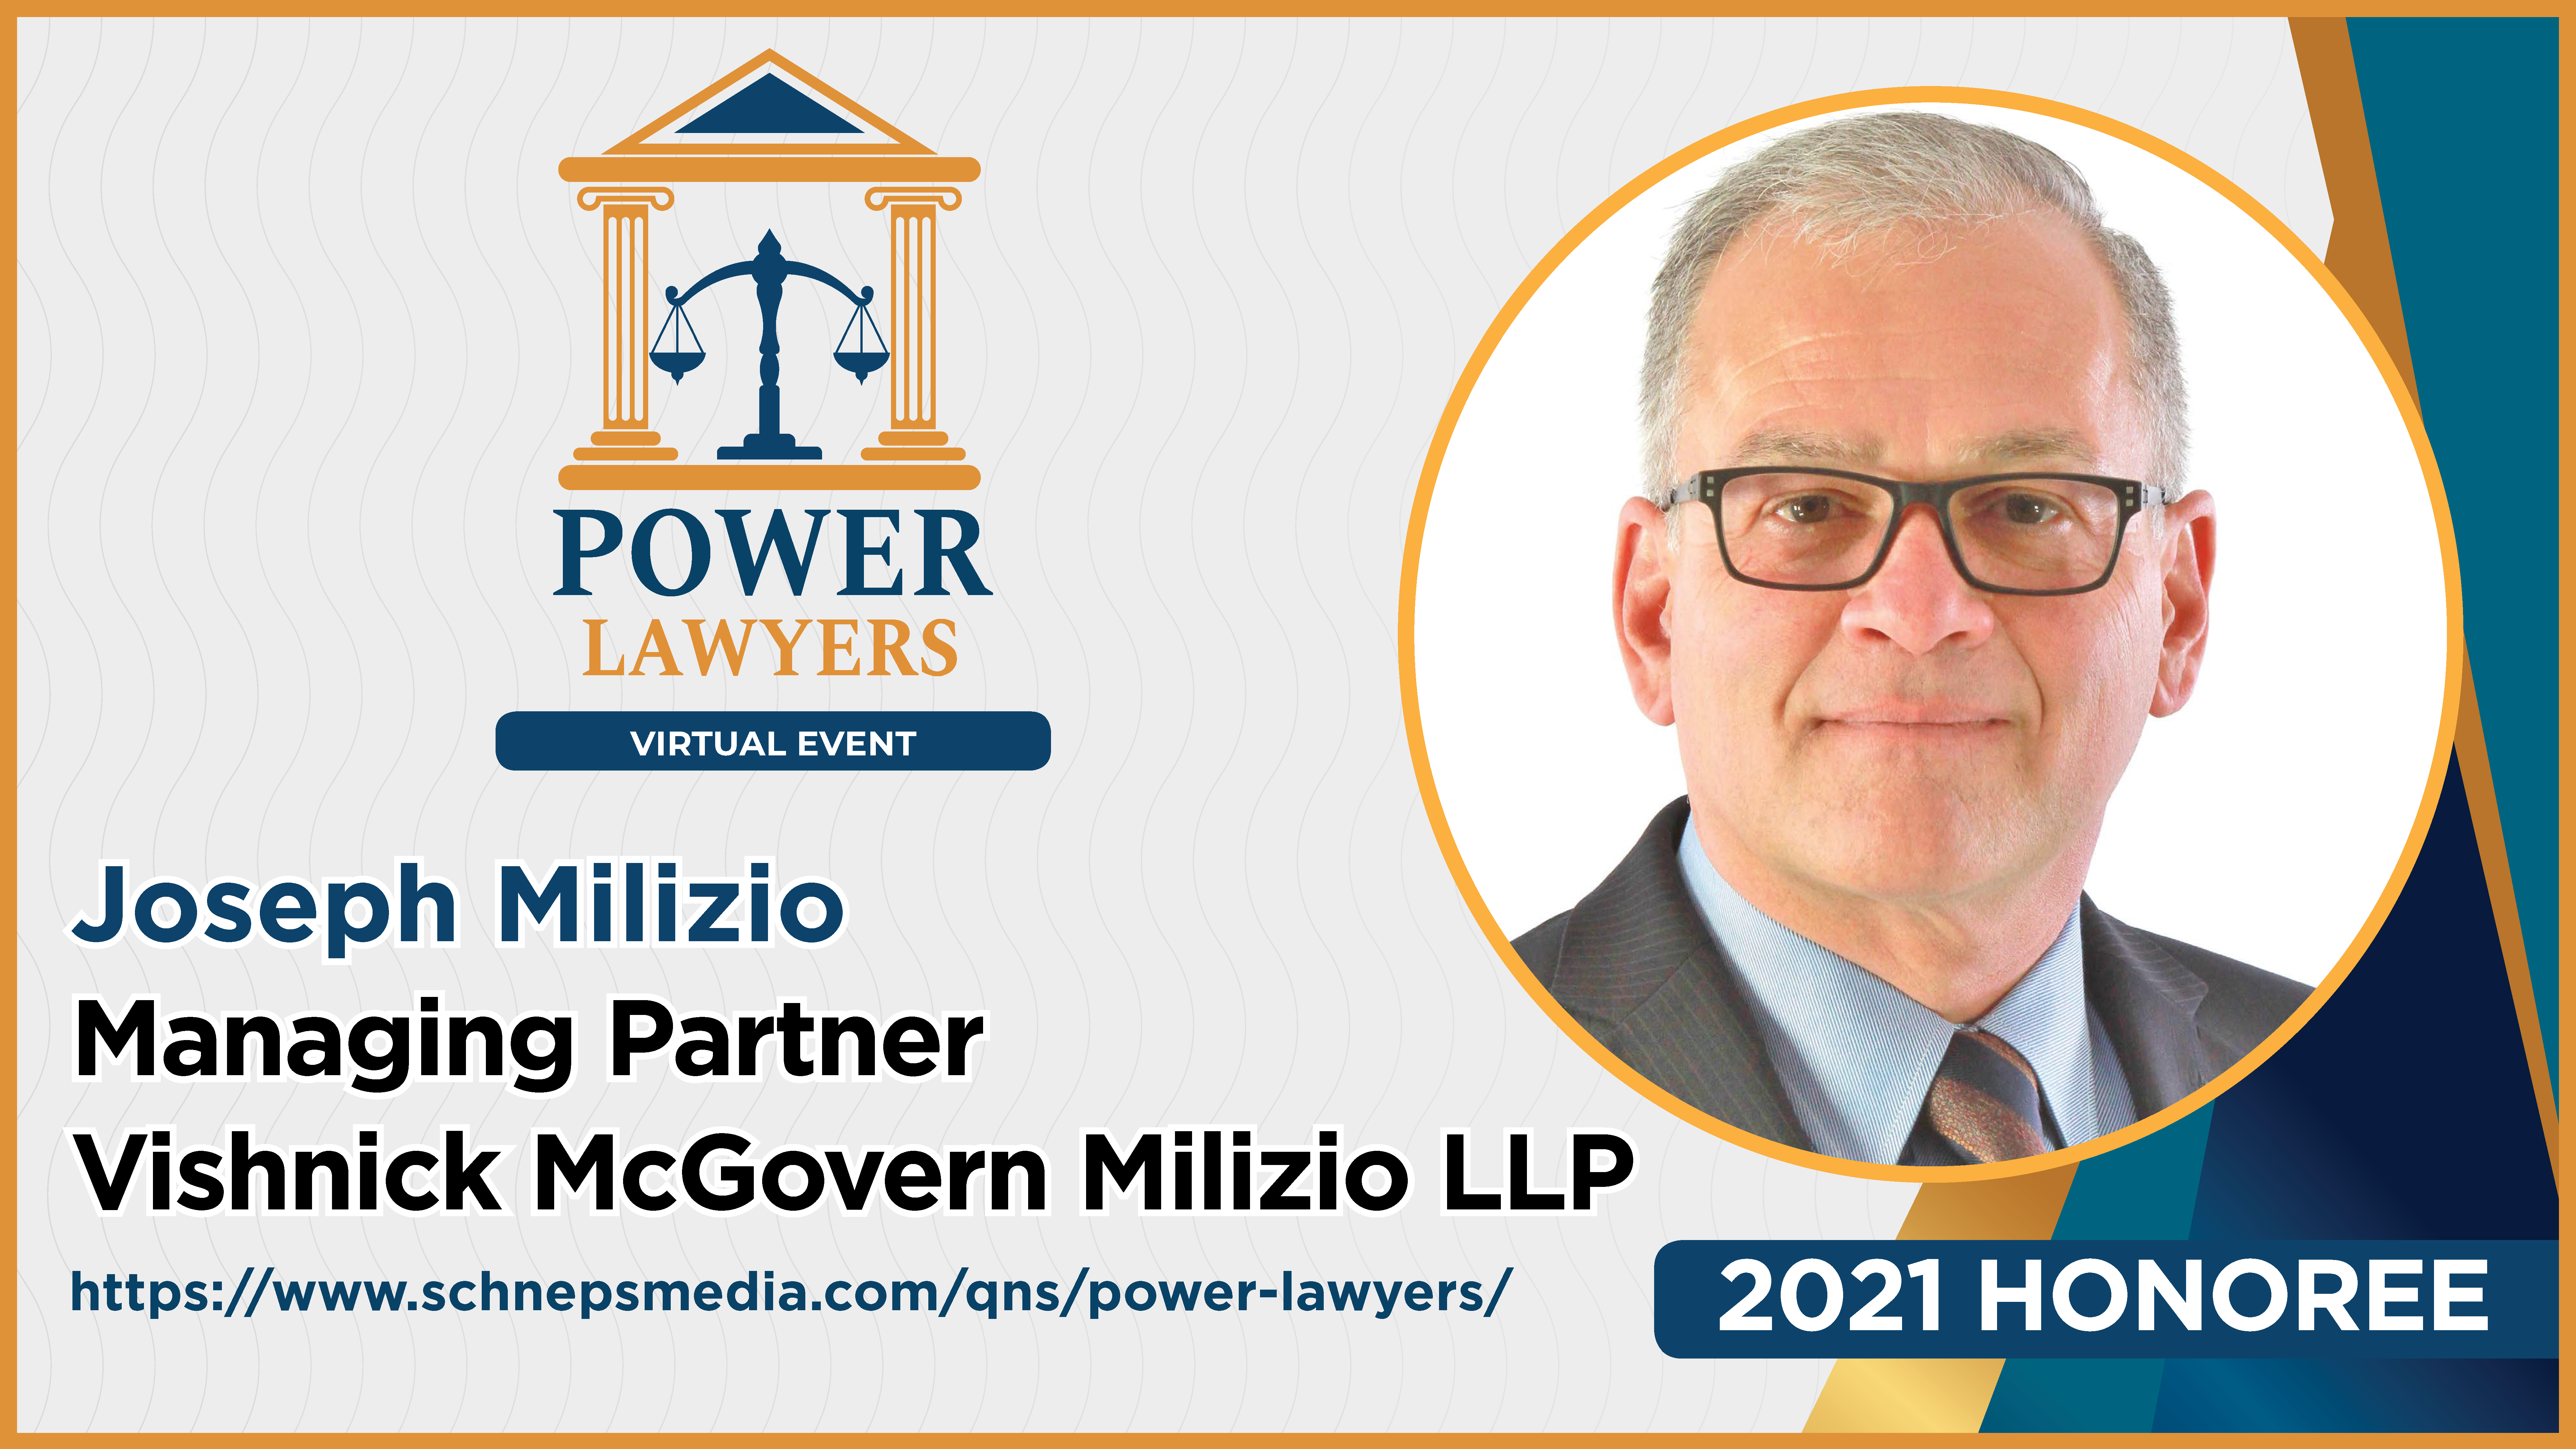 Joseph Milizio Named 2021 Power Lawyer